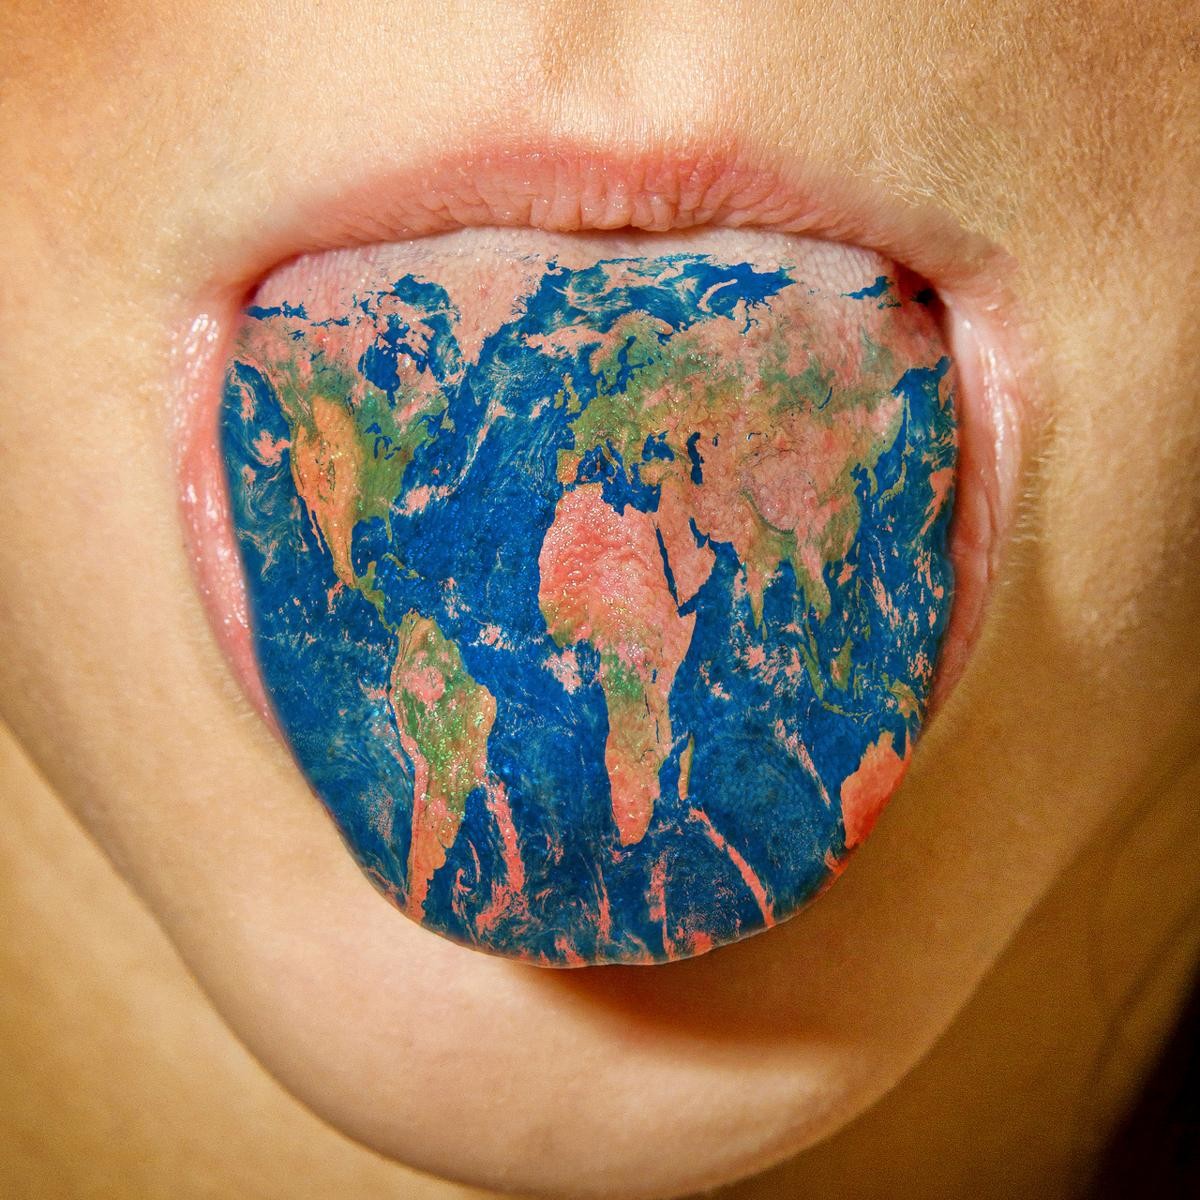 1200-98470805-world-map-tattoo-on-tongue